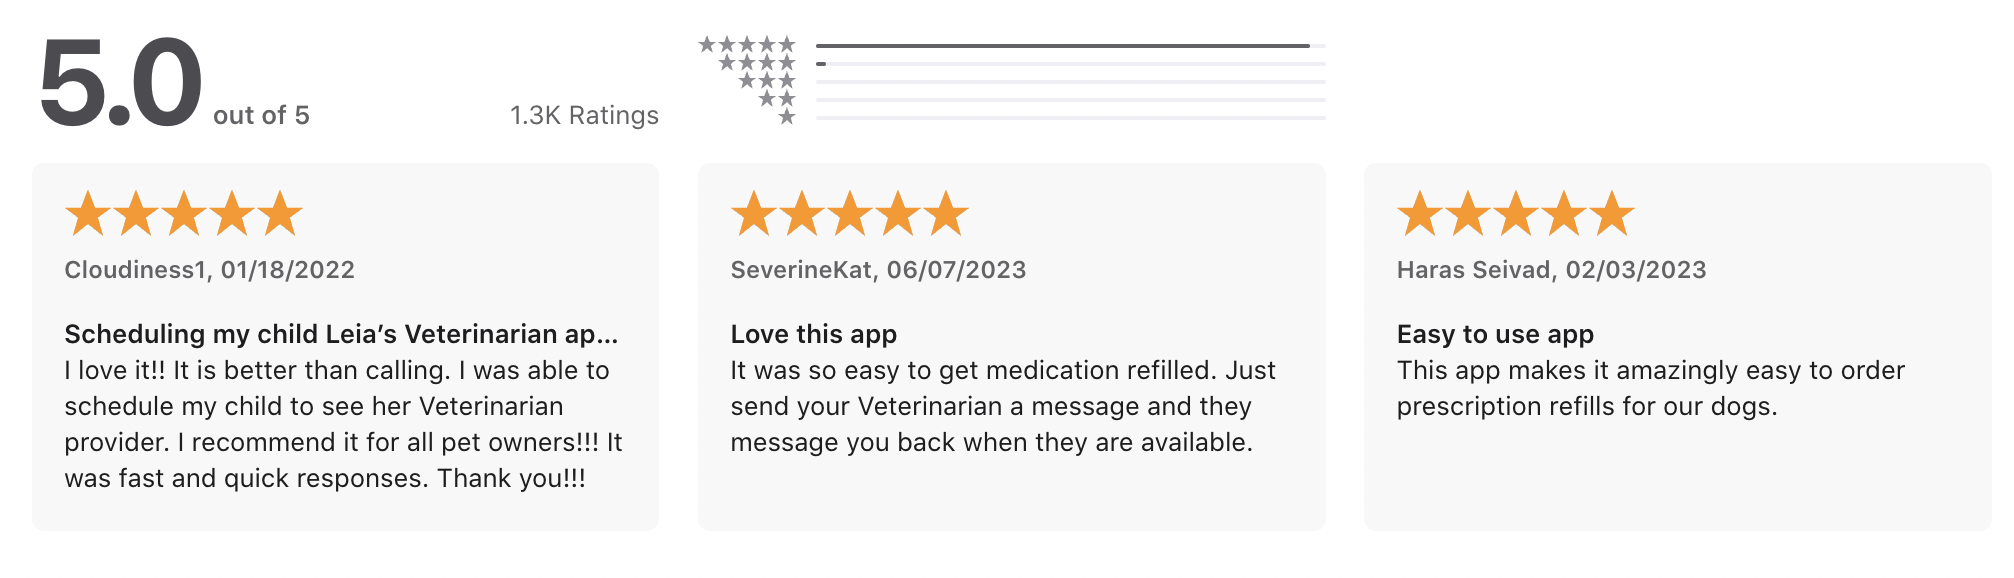 PetsApp Reviews in the App Store